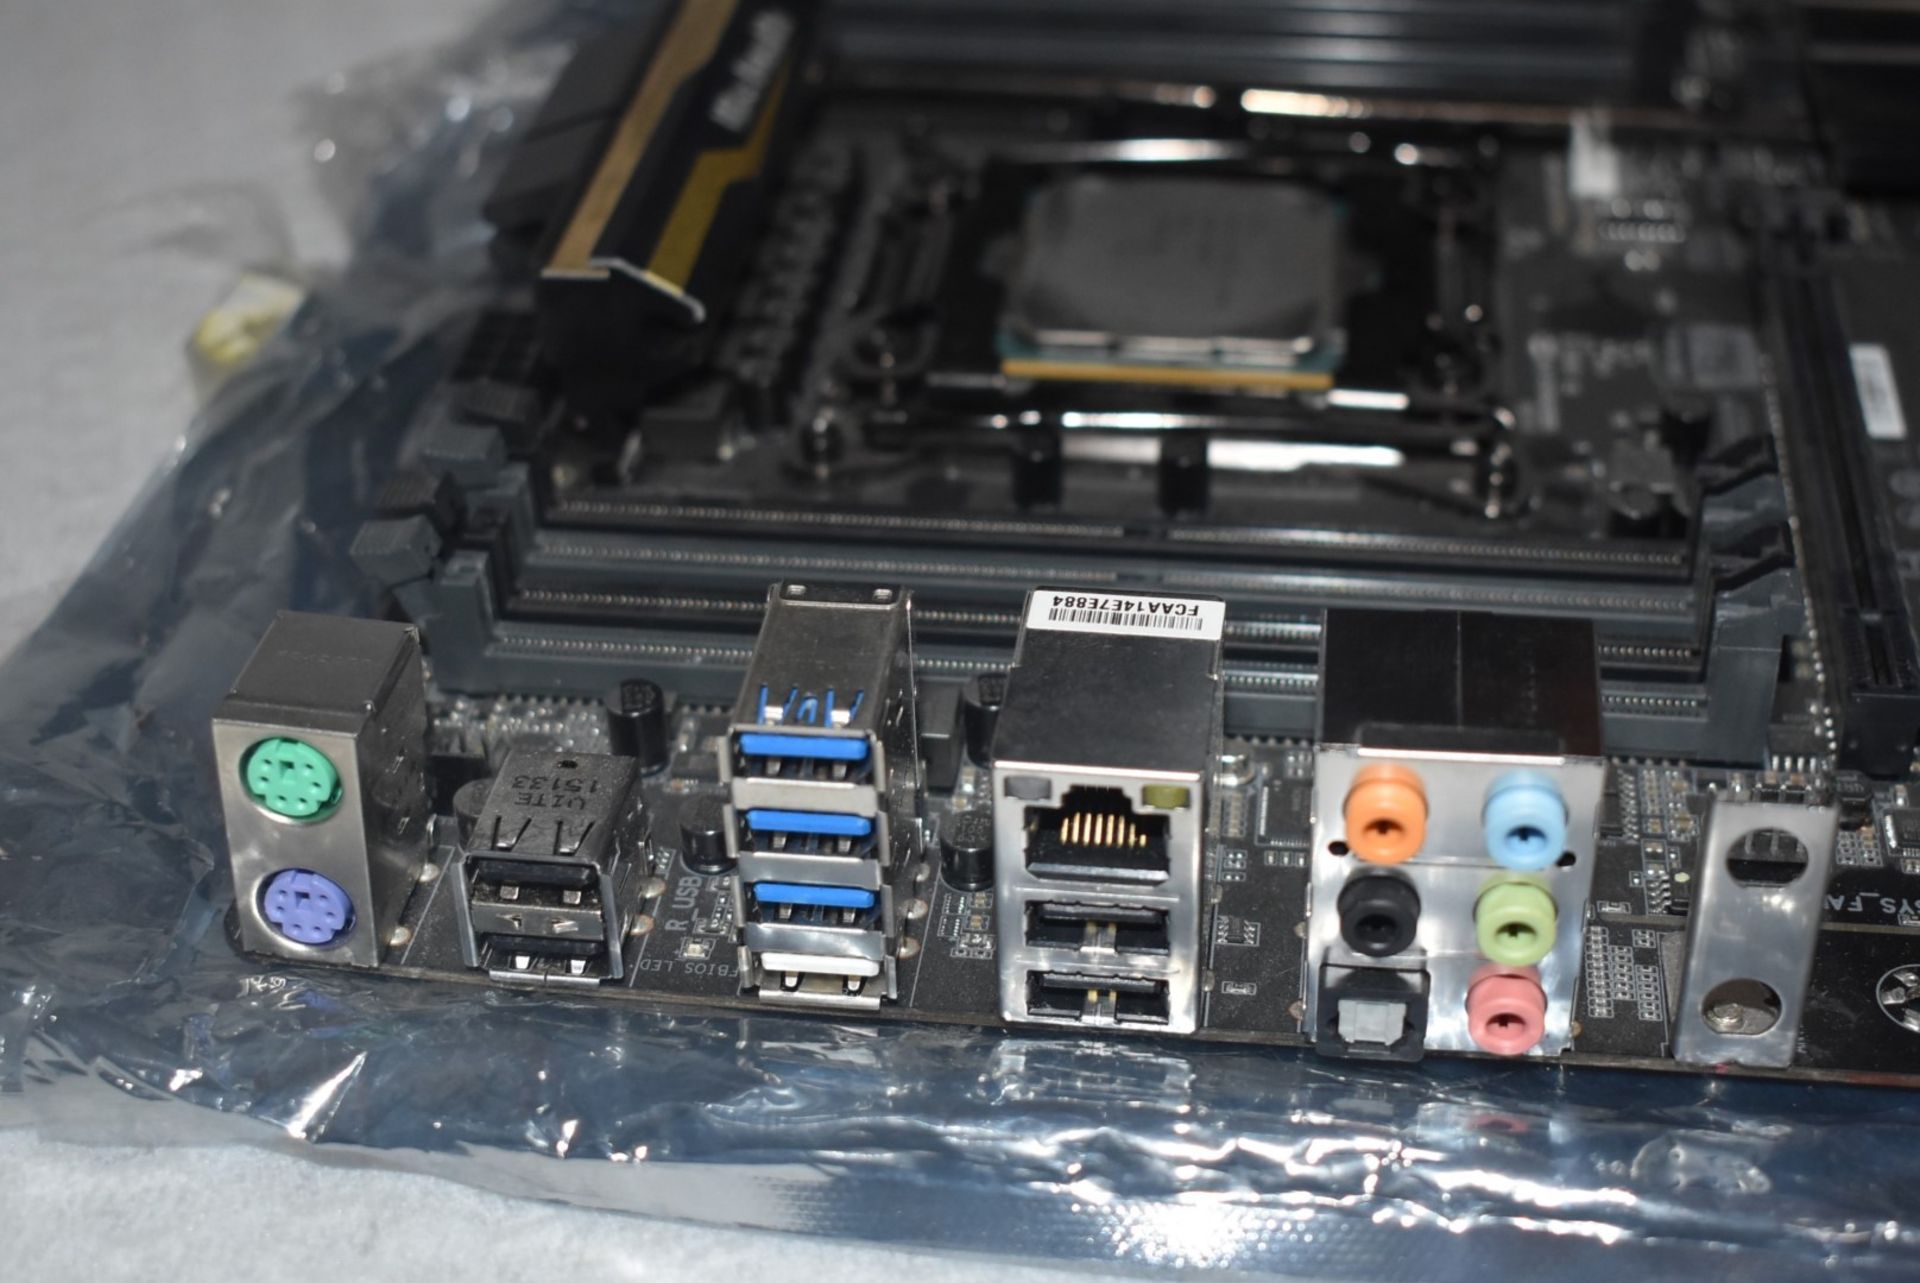 1 x Gigabyte GA-X99-SLI Motherboard With an Intel Core i7-5820k Processor - Image 4 of 5